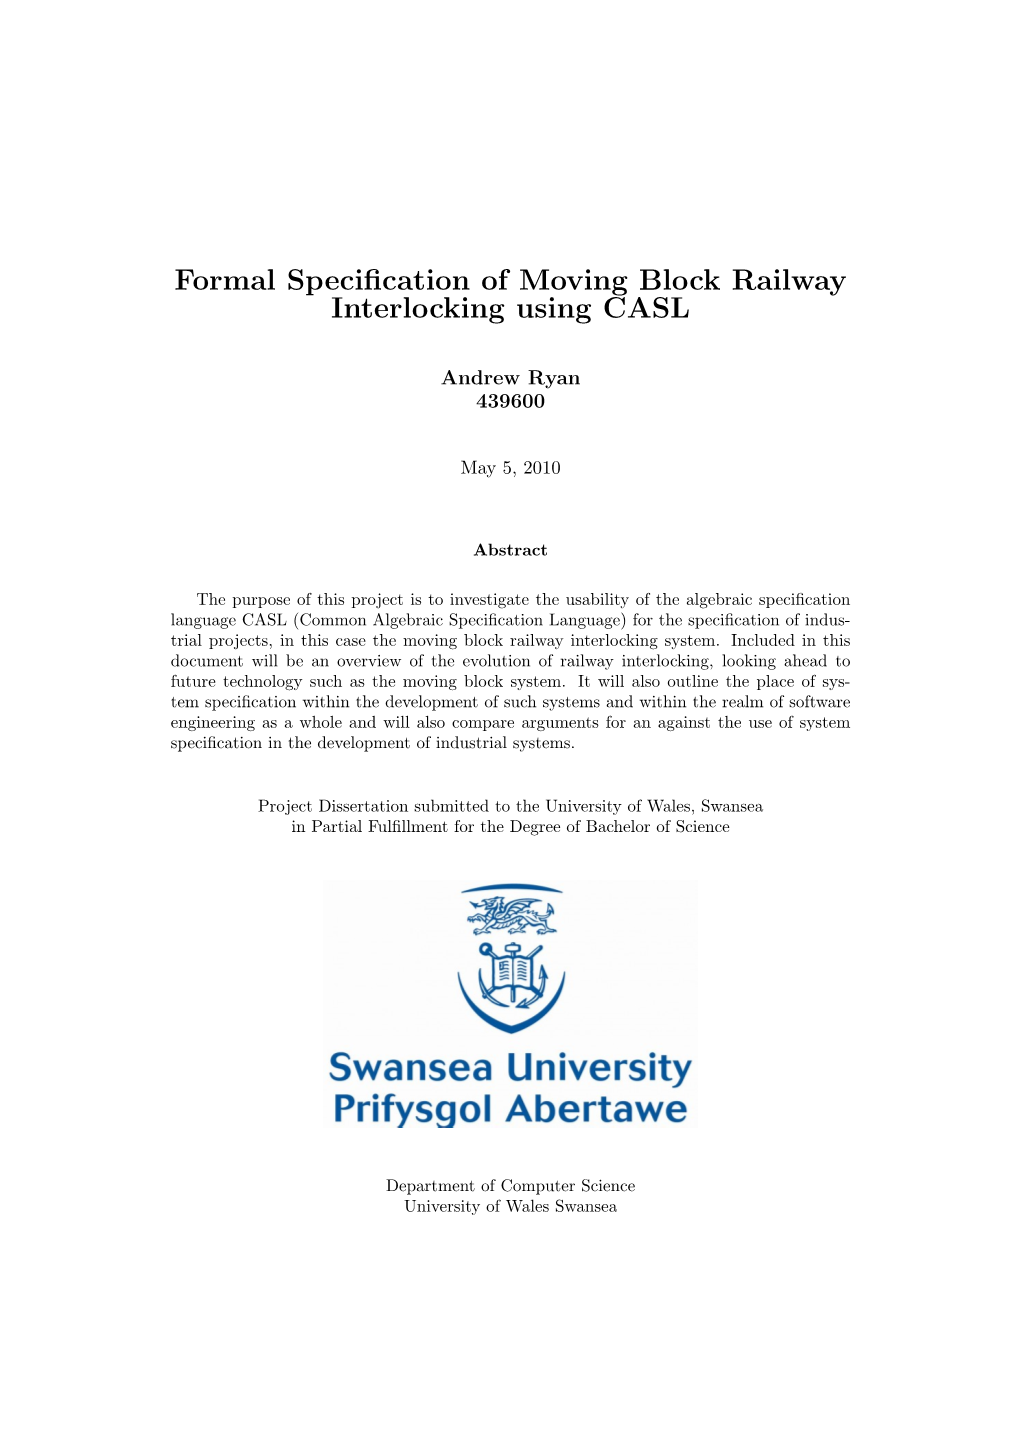 Formal Specification of Moving Block Railway Interlocking Using CASL